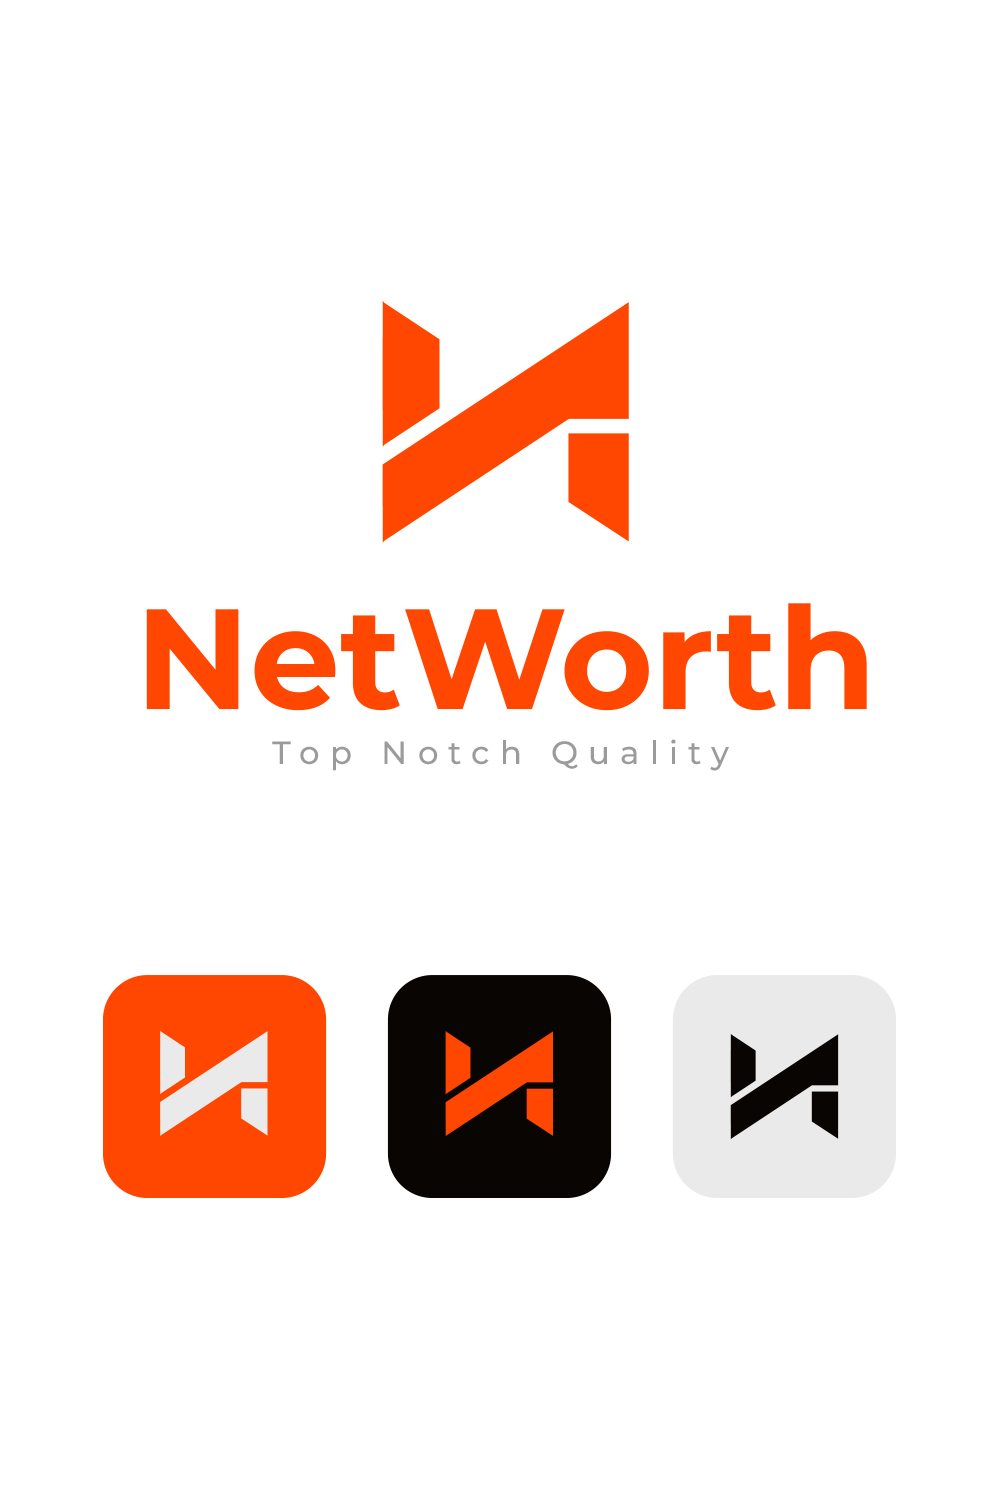 Networth logo Design template - Editable pinterest preview image.